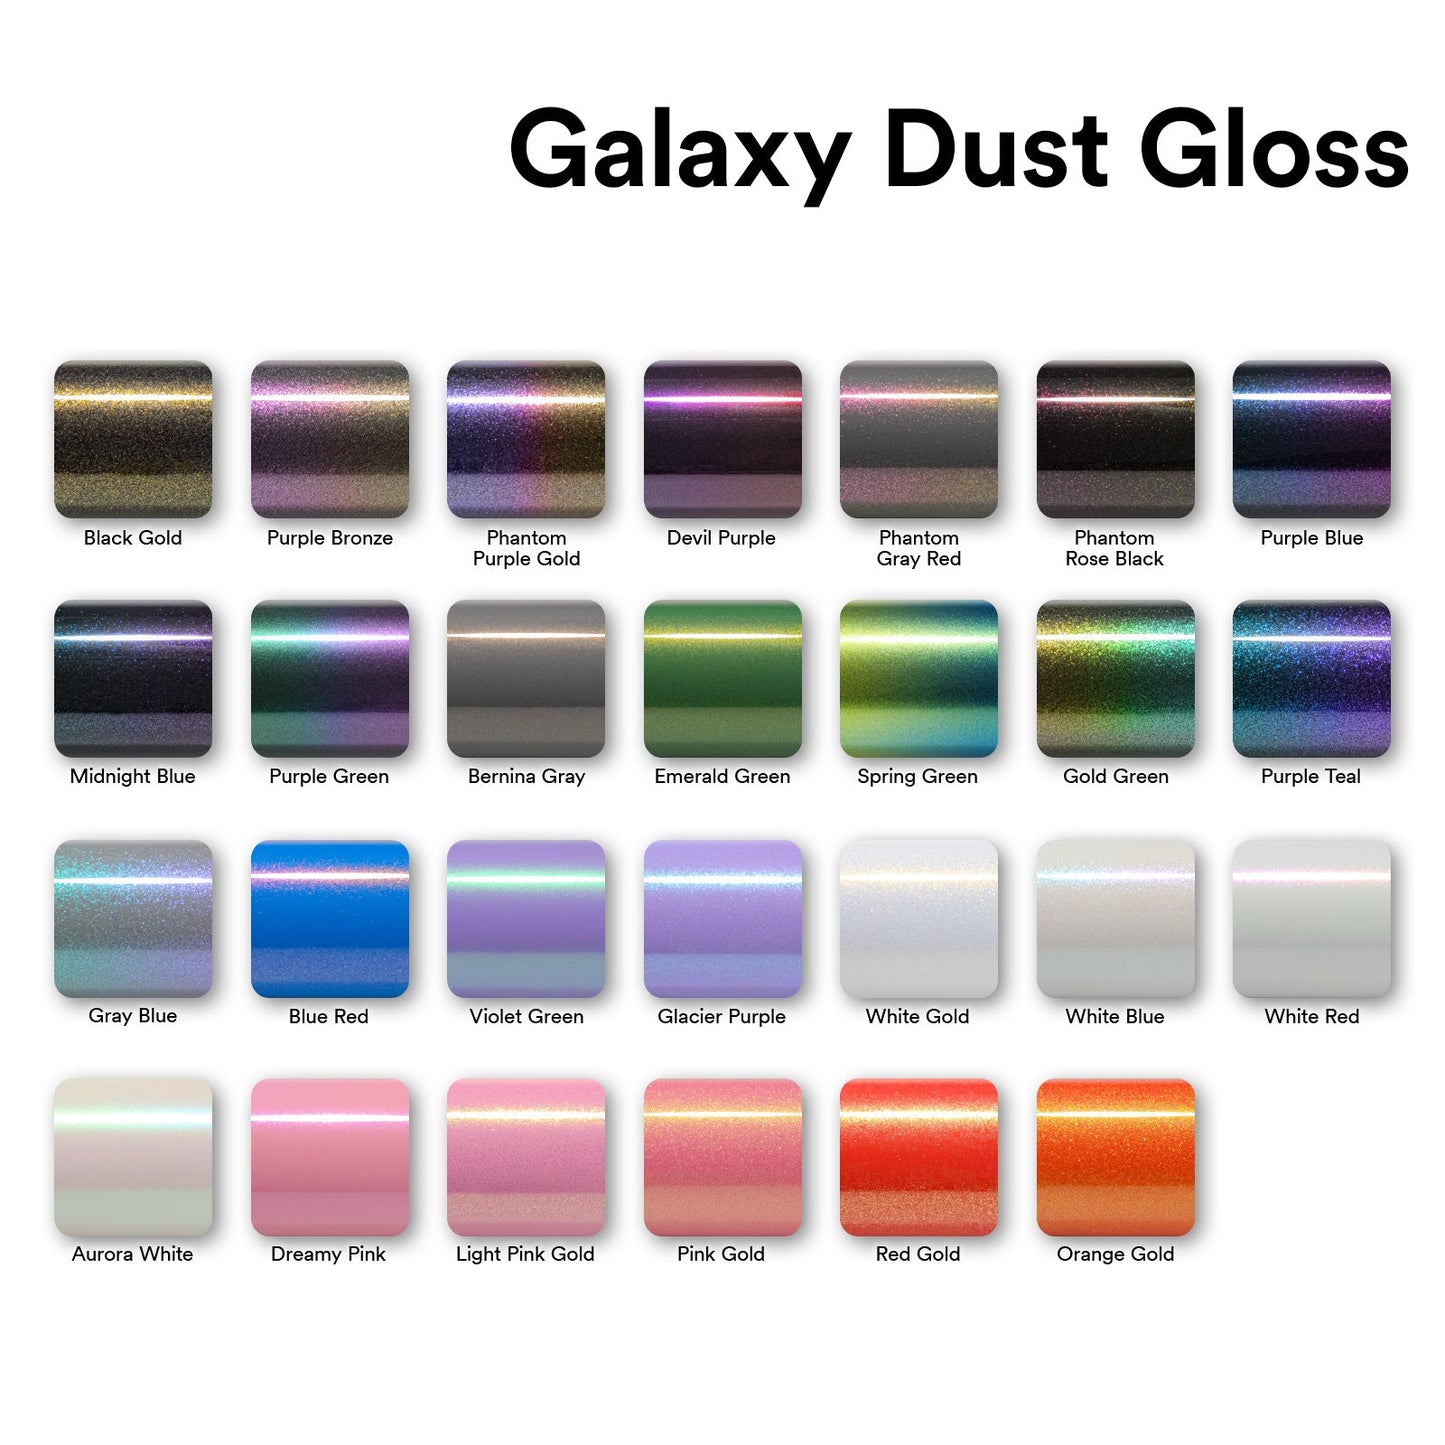 Galaxy Dust Gloss Violet Green Vinyl Wrap